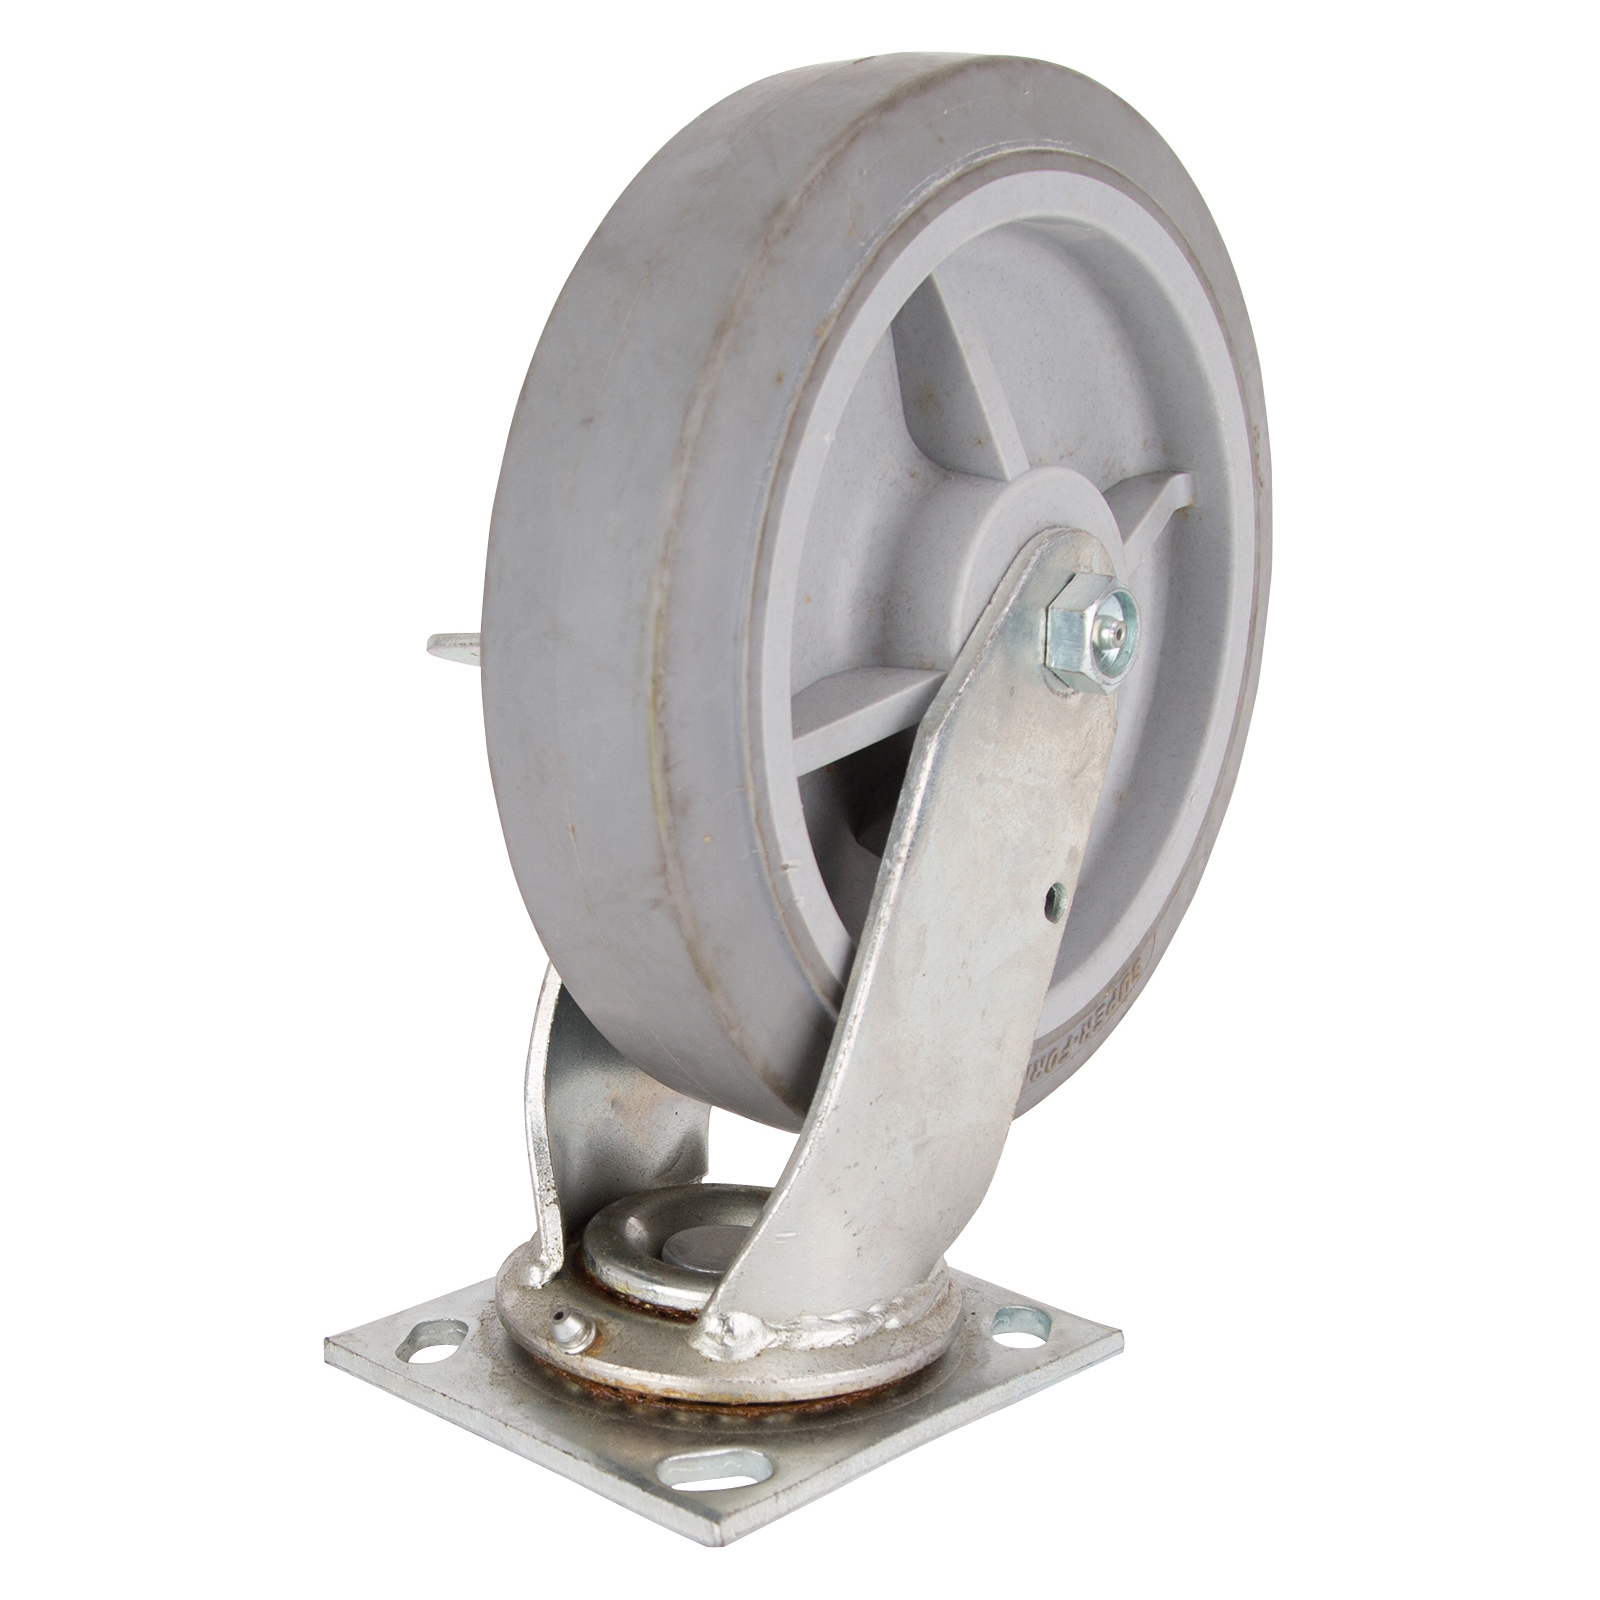 JC-T08 Swivel/Brake Caster, 8 in Dia Wheel, 2 in W Wheel, Thermoplastic Rubber Wheel, Gray, 750 lb